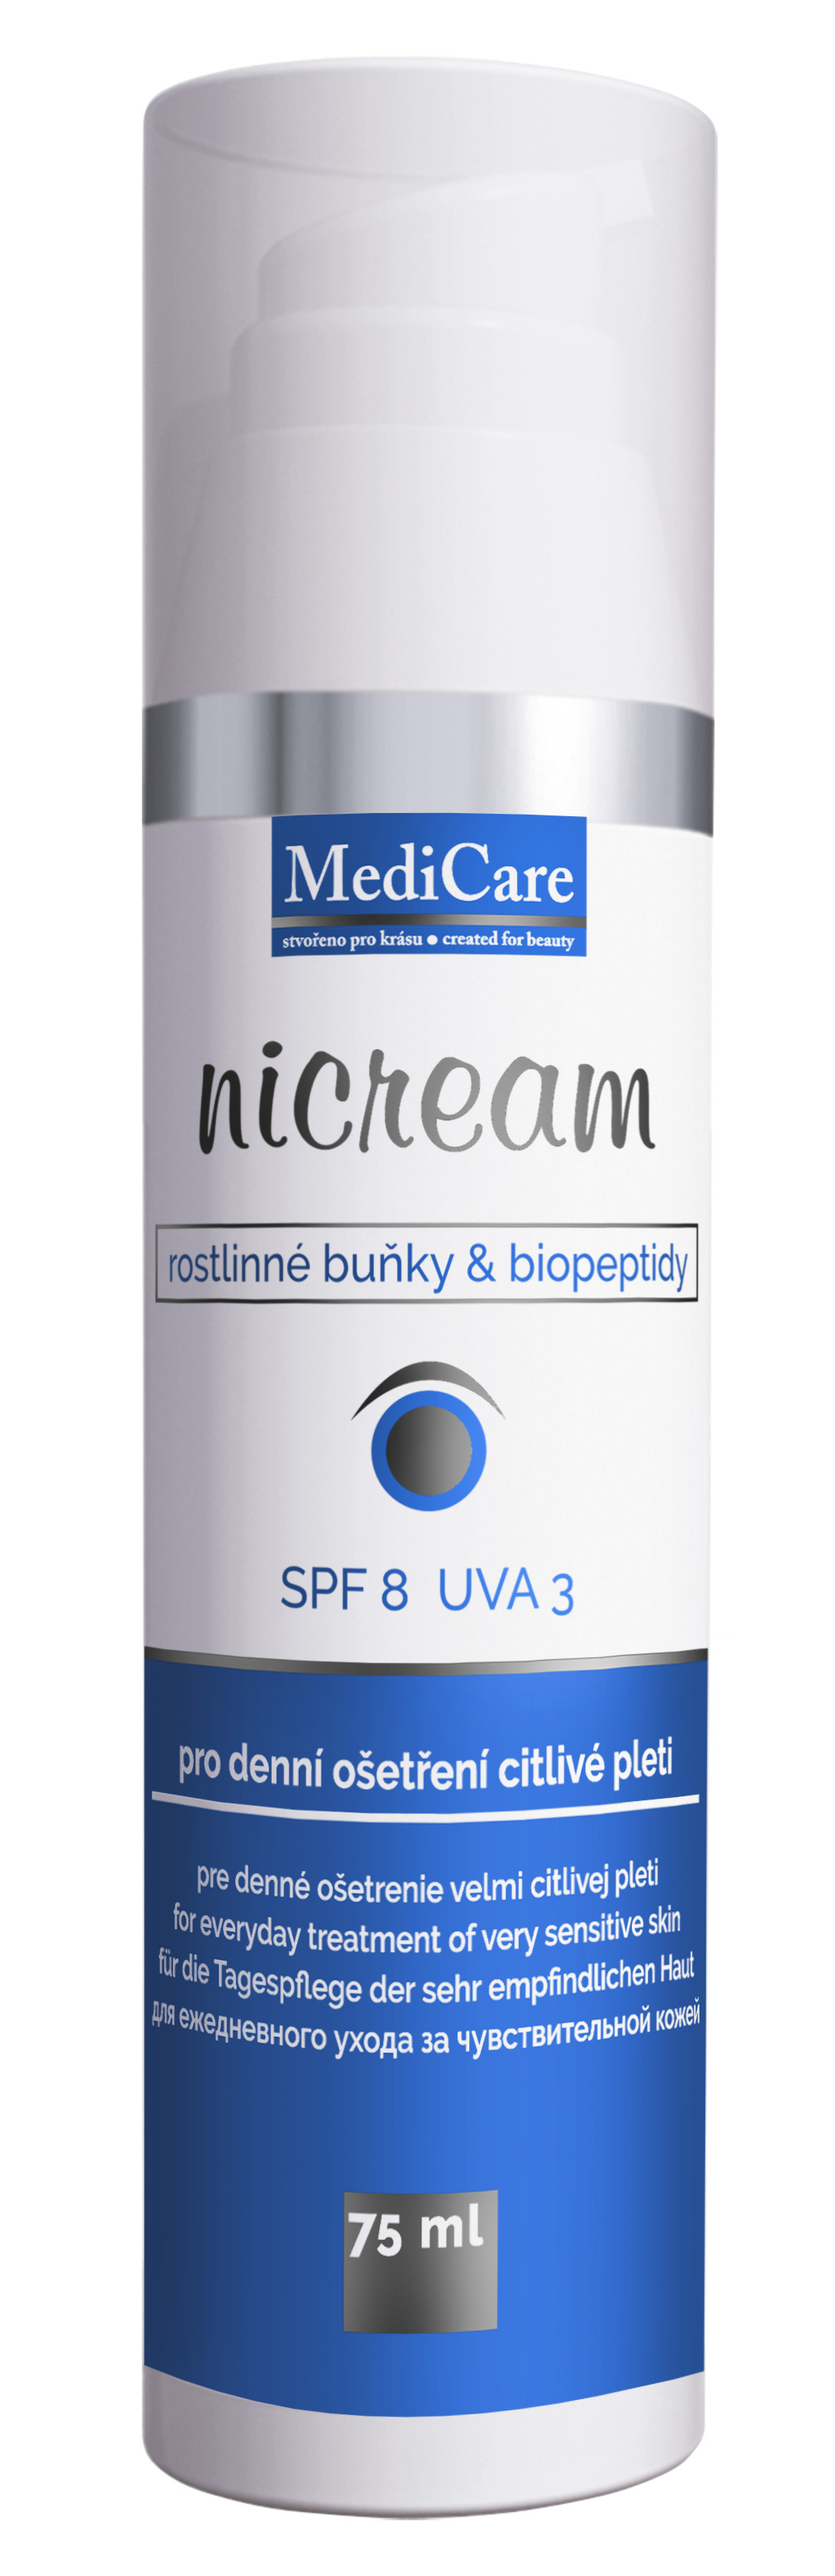 SynCare NICREAM krém s rostlinnými kmenovými buňkami s fyzikálním UV filtrem 10